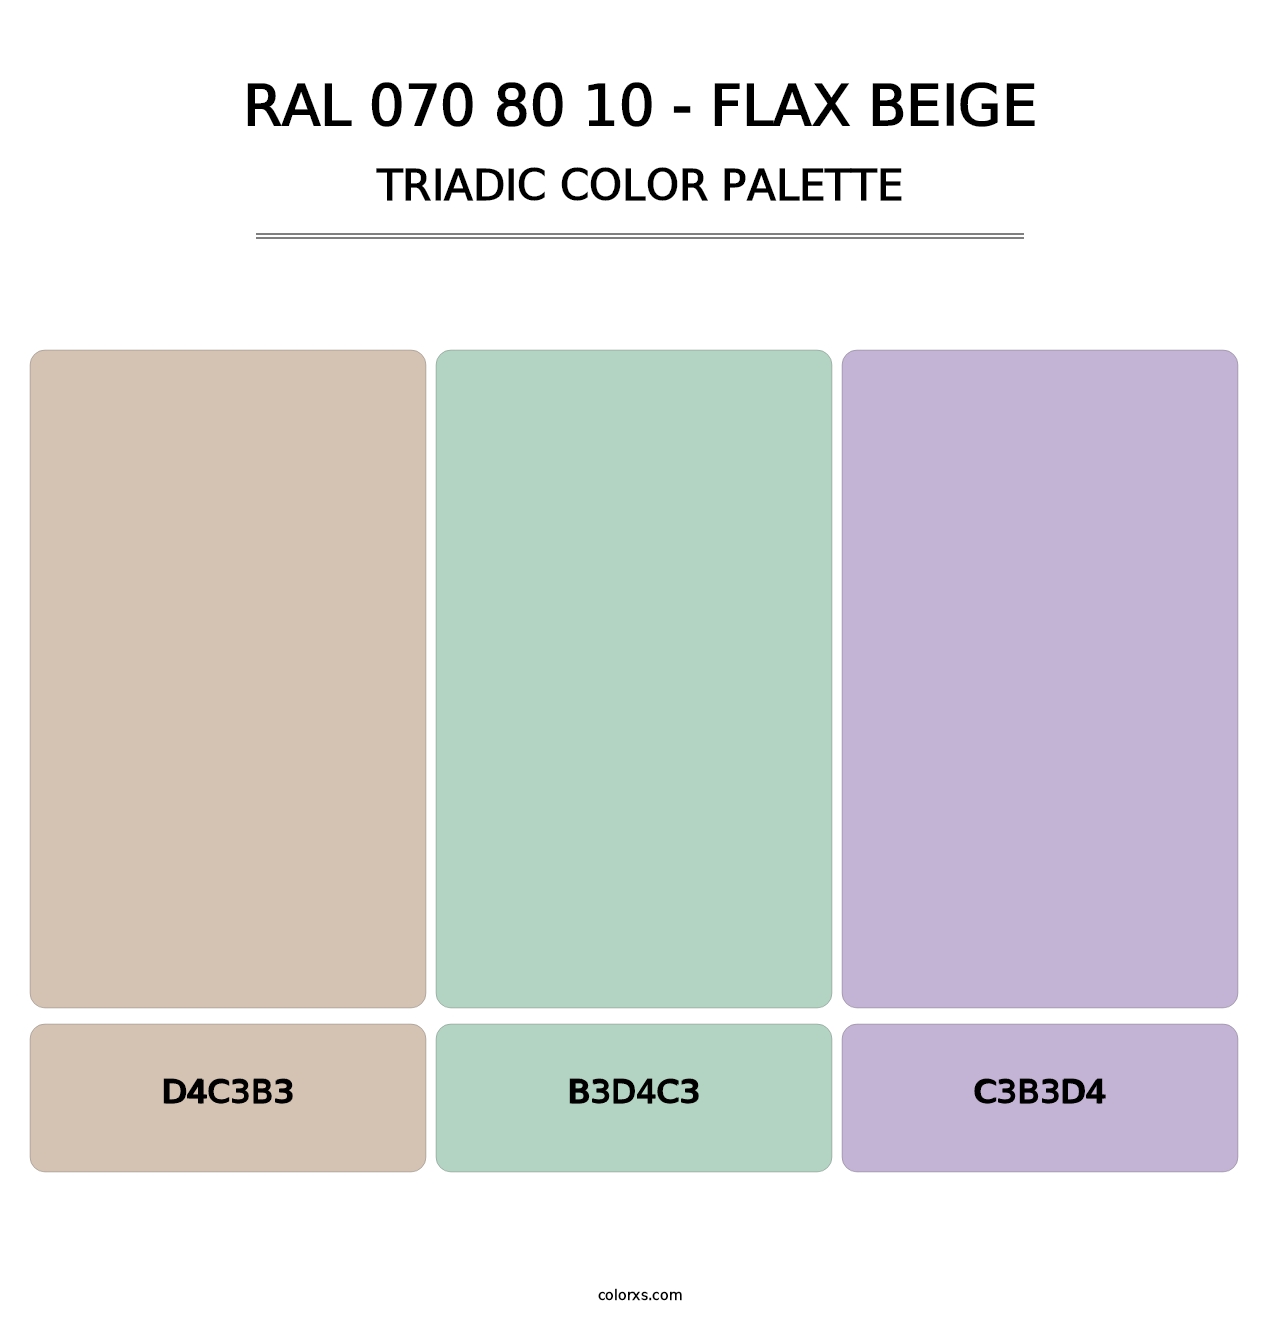 RAL 070 80 10 - Flax Beige - Triadic Color Palette